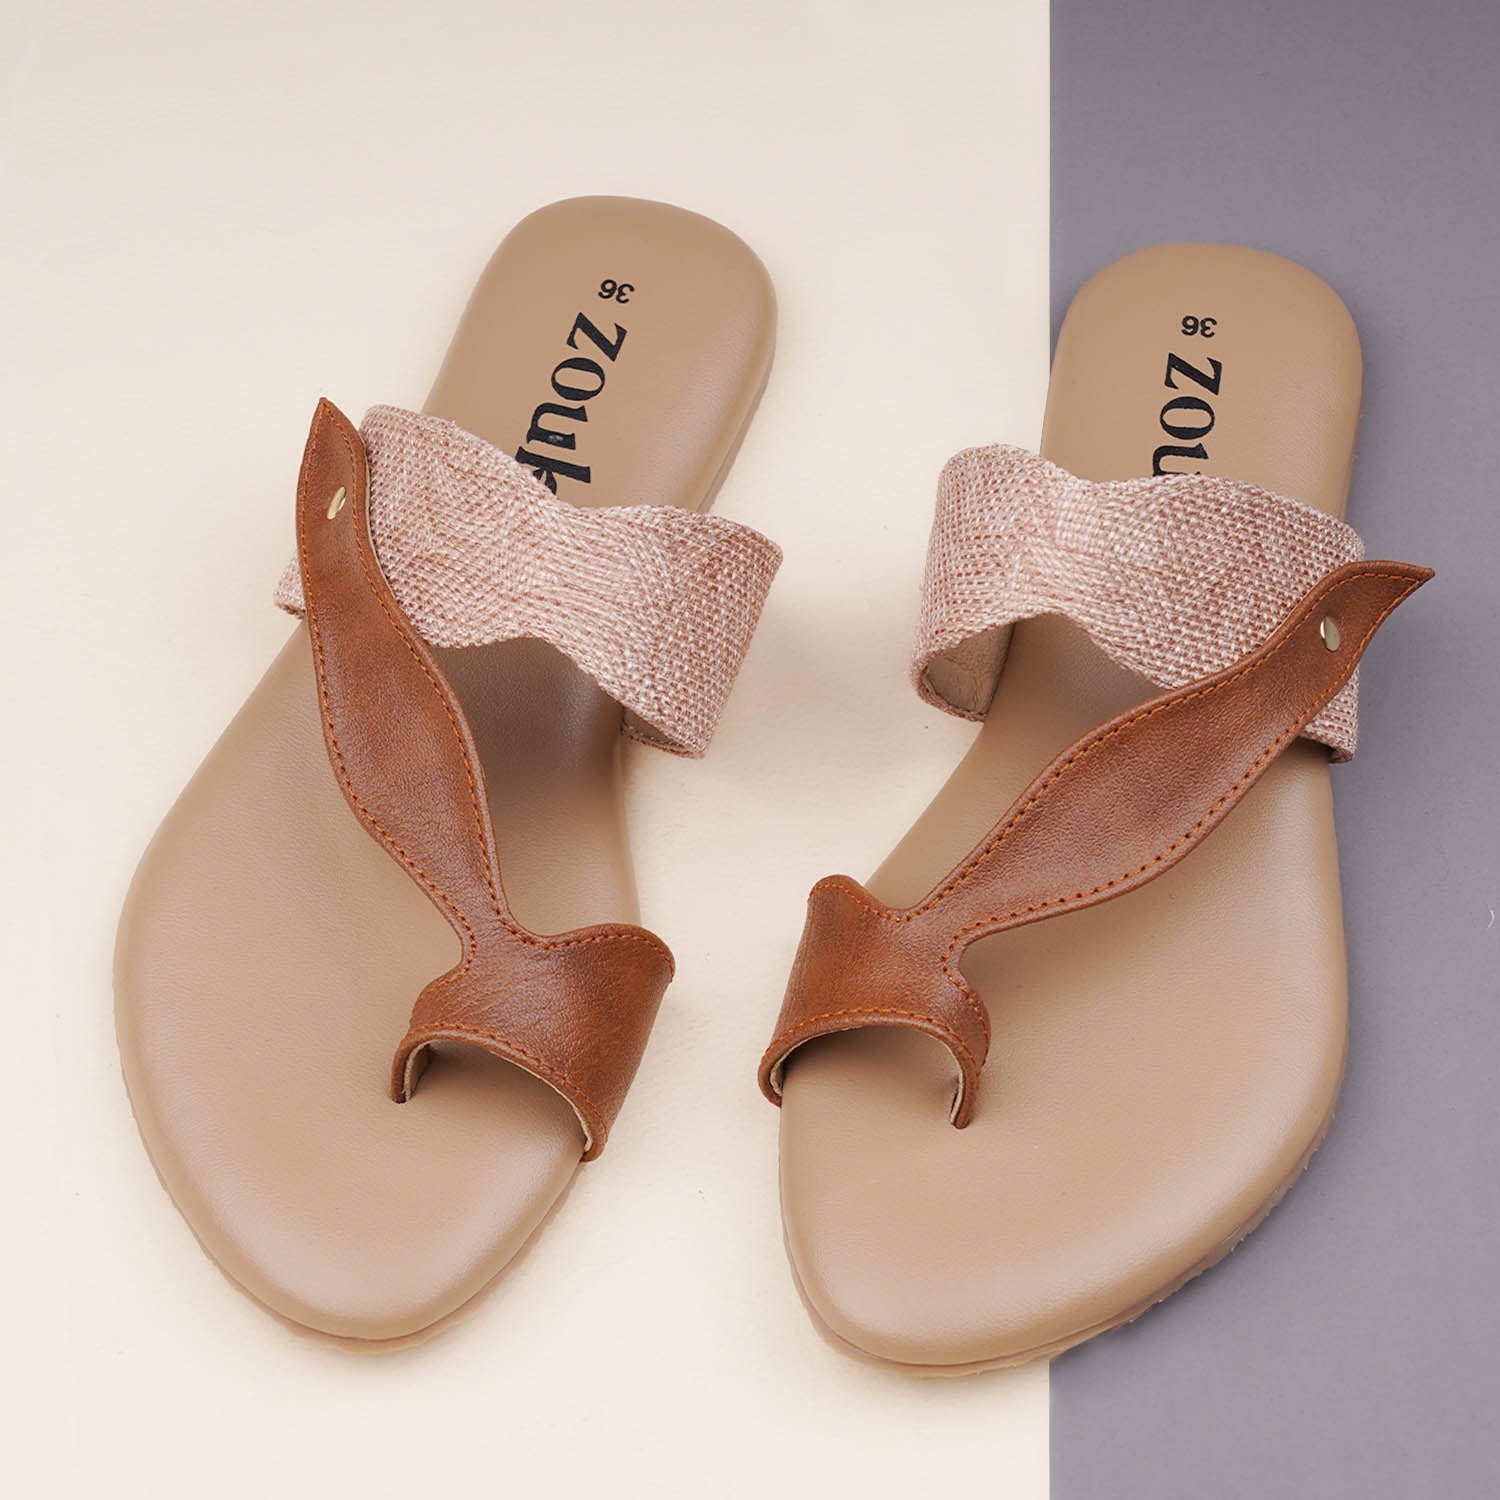 Sandal Design Heels - Buy Sandal Design Heels online in India